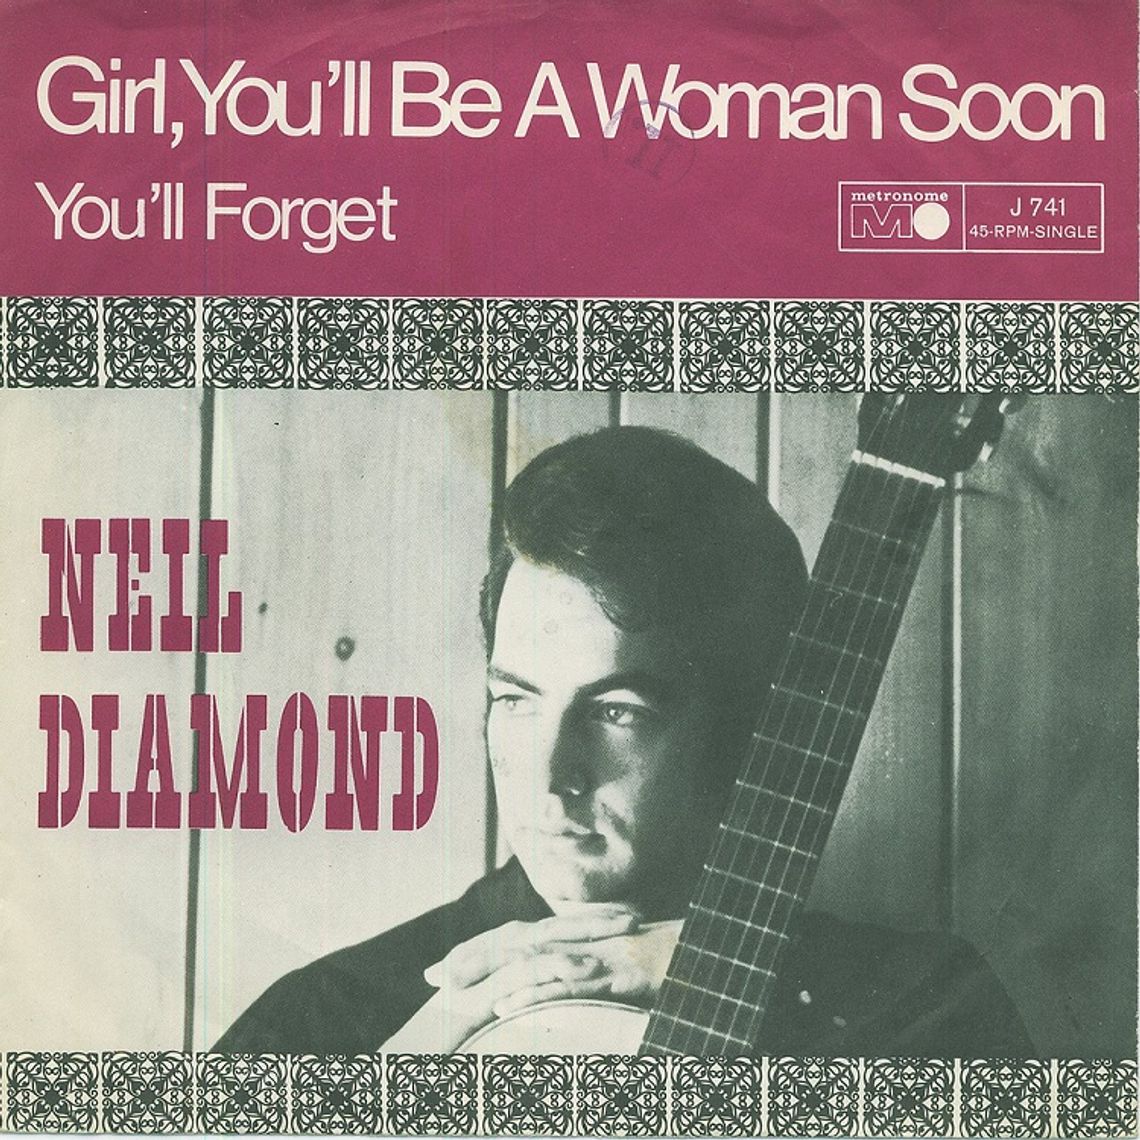 NEIL DIAMOND "Girl, you'll be a woman soon"